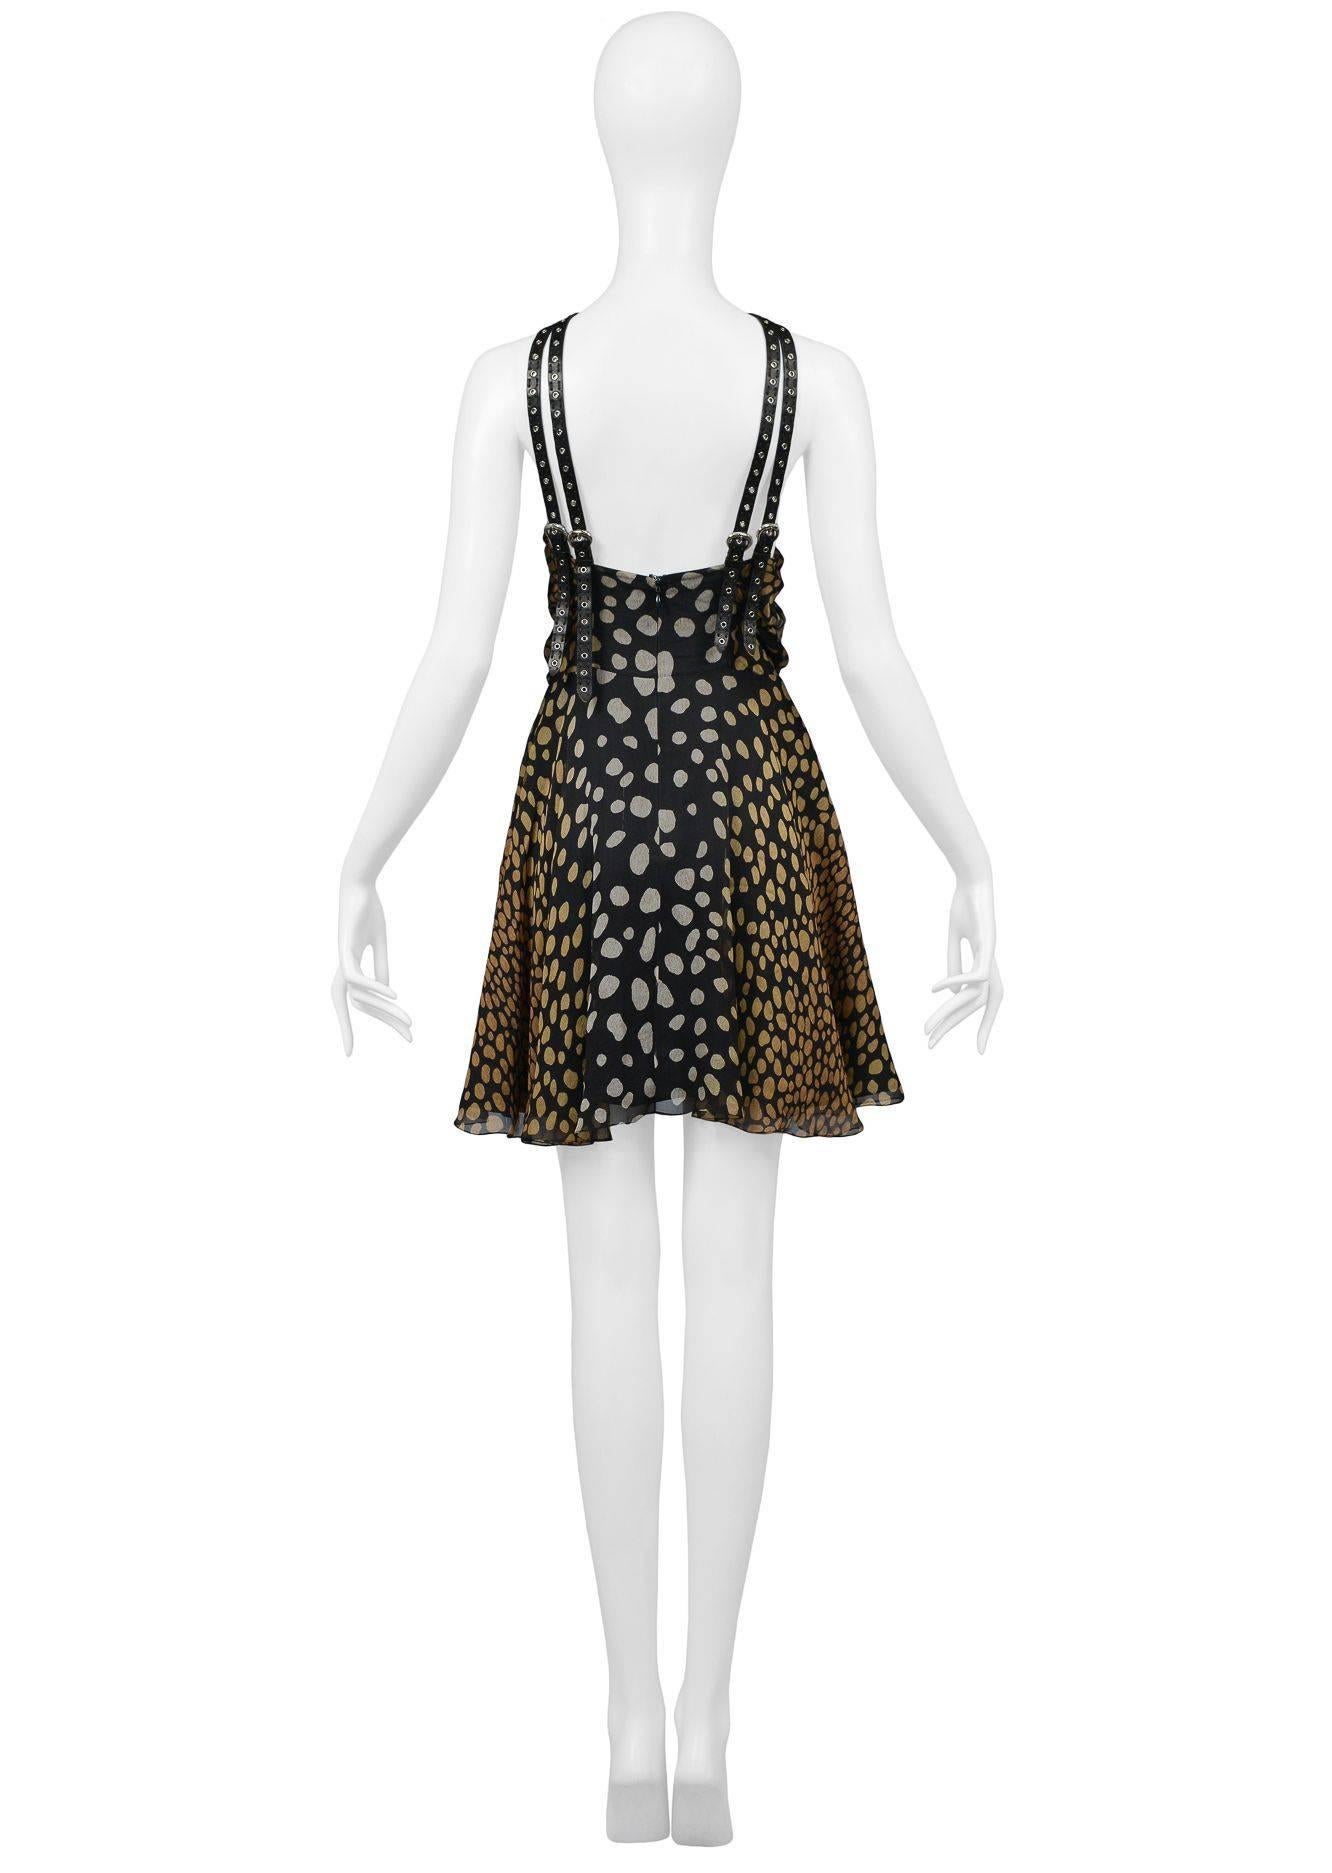 Black Christian Dior Speckled Halter Dress With Harness Straps 2009